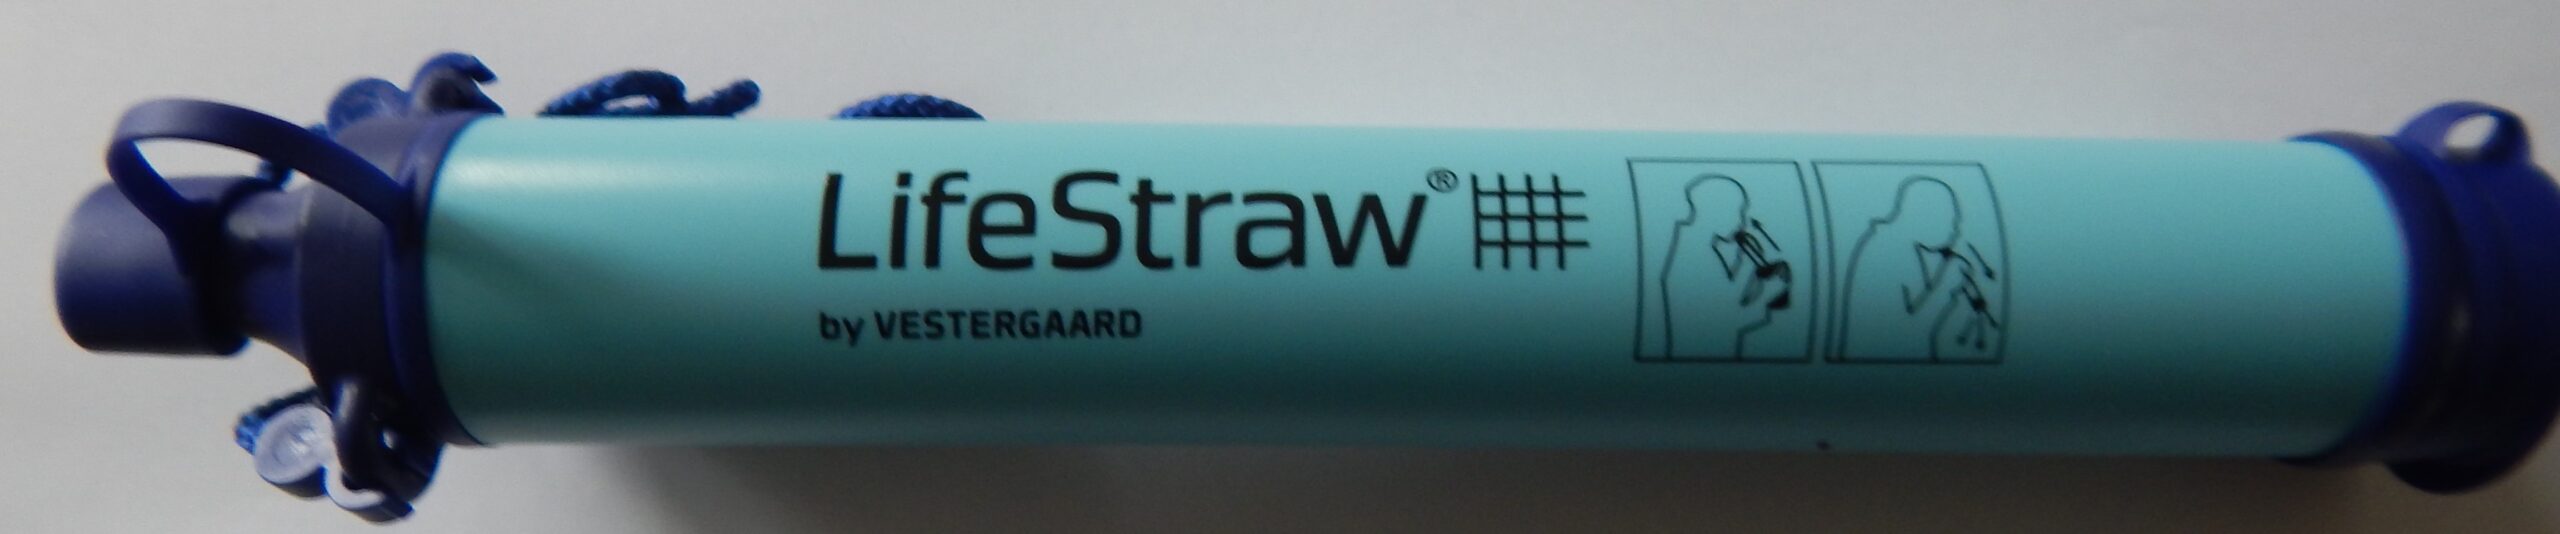 lifestraw [ersonal water filter